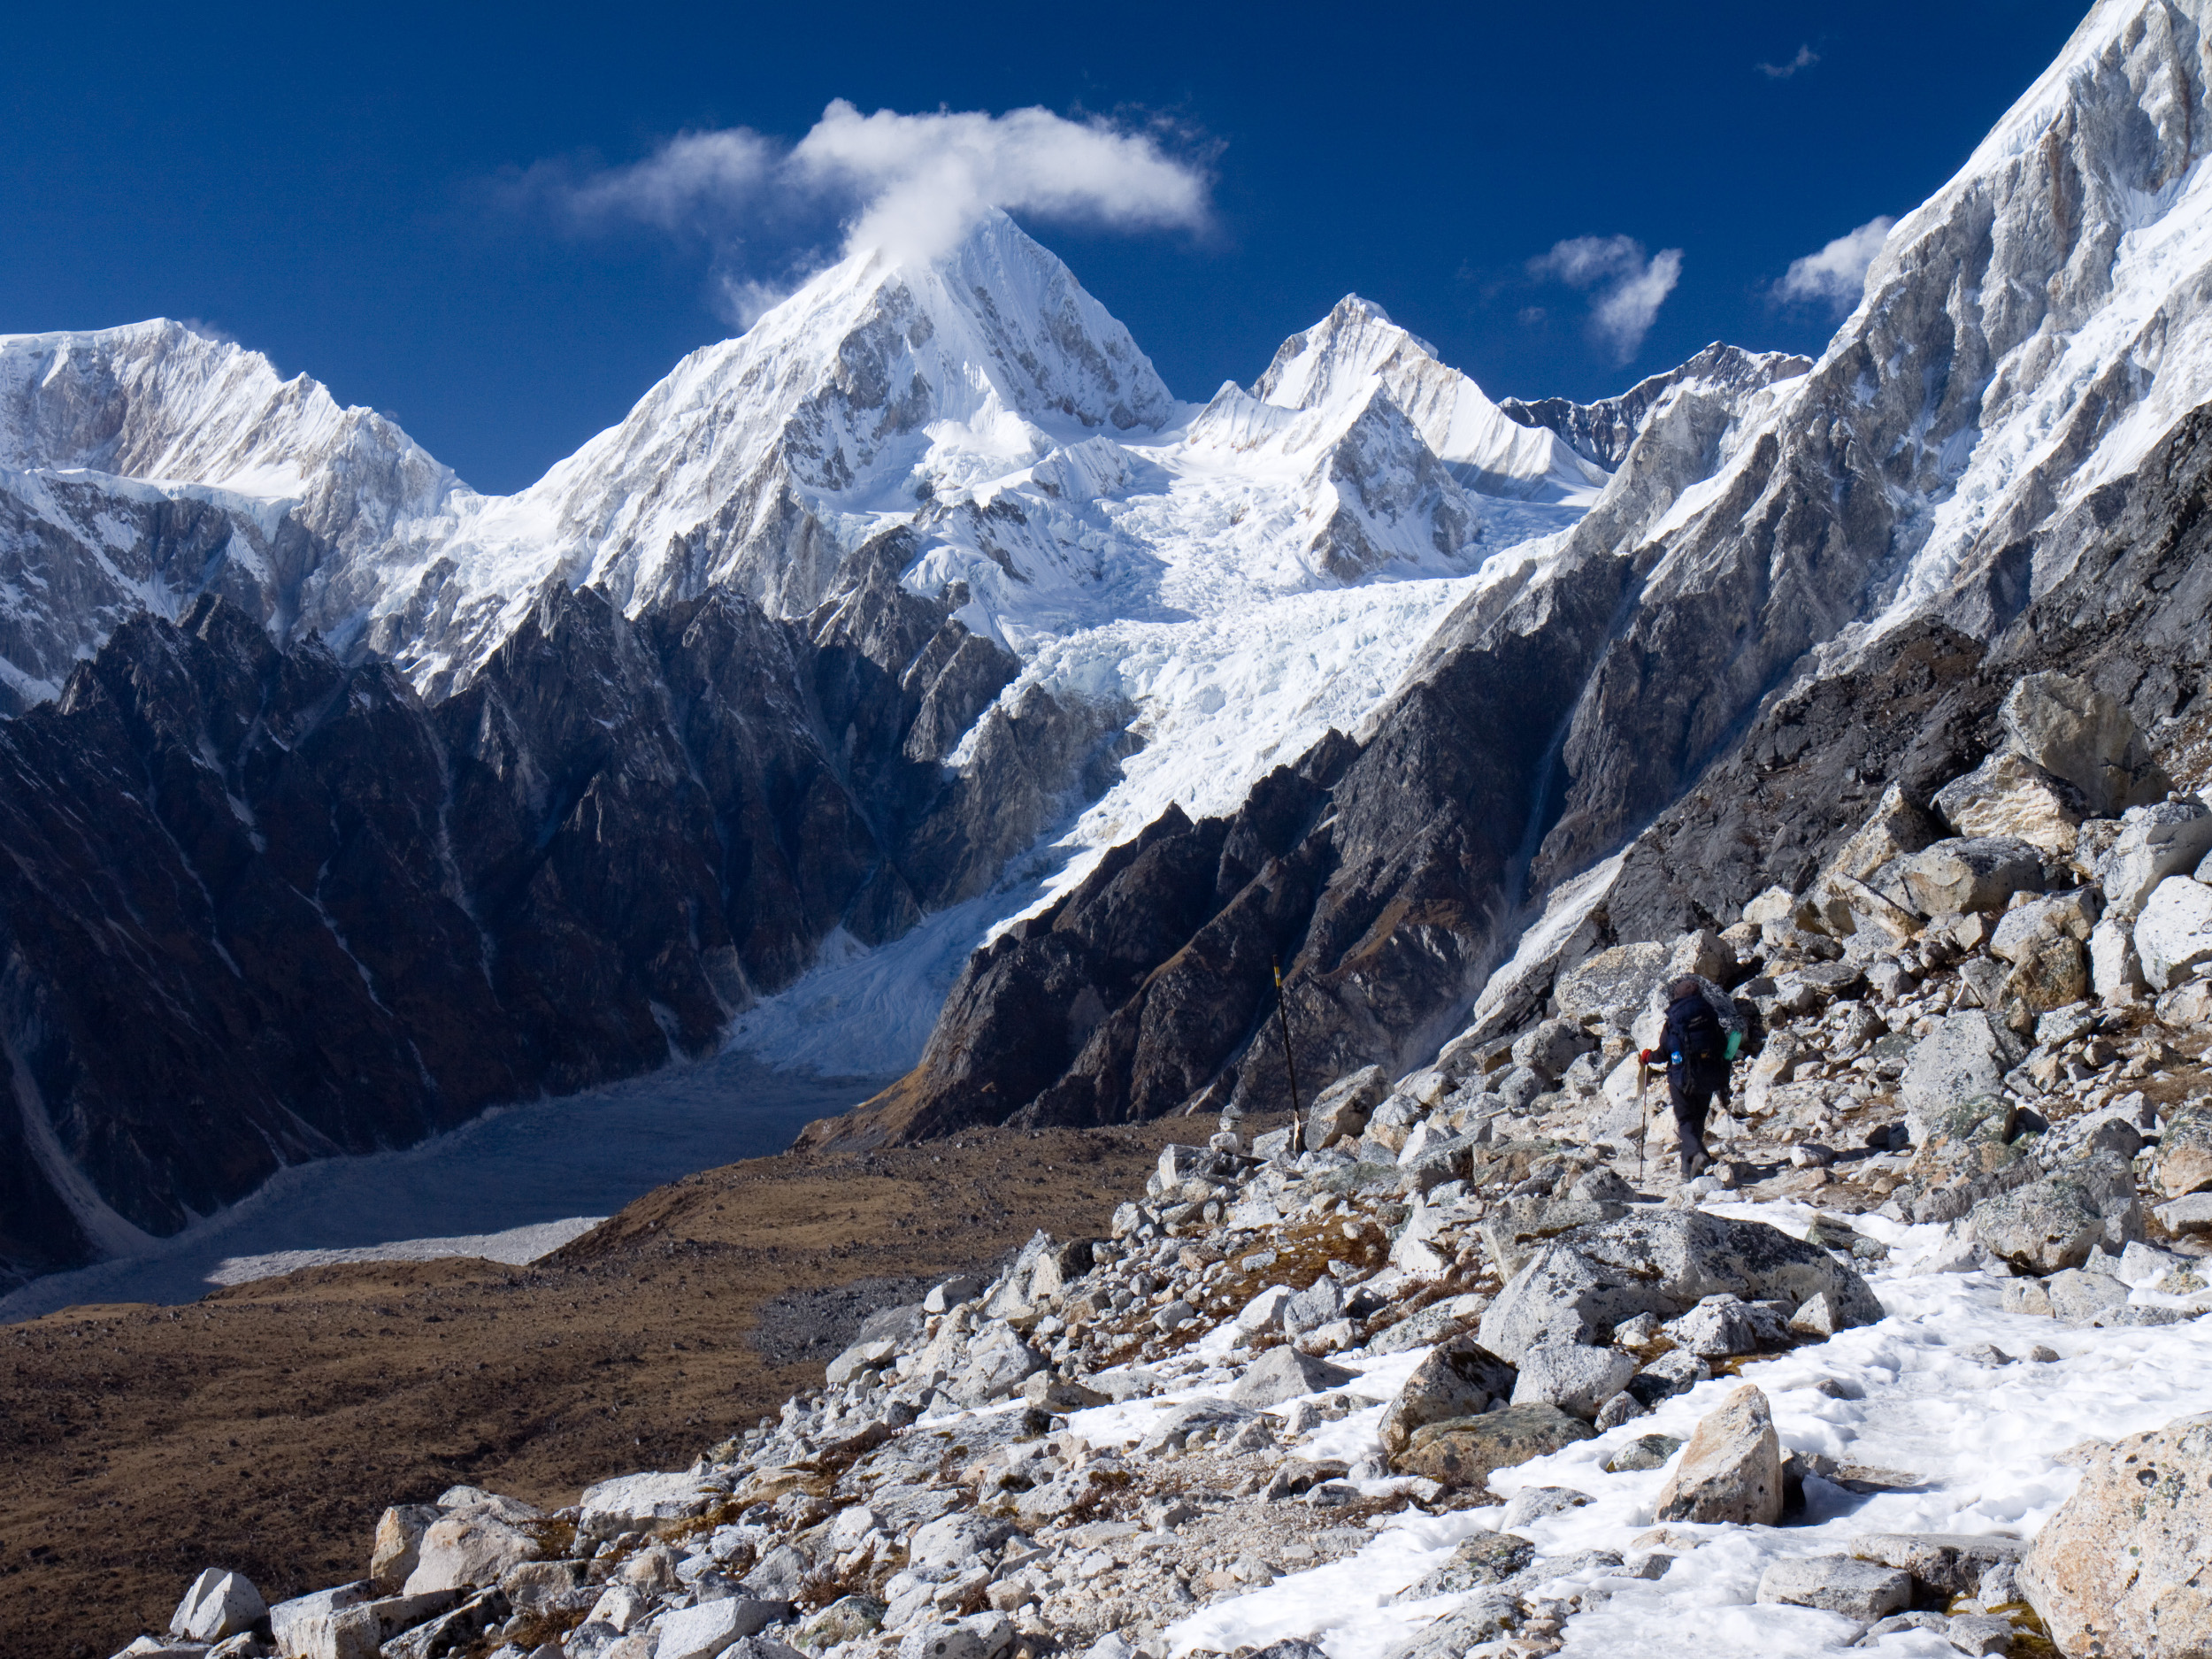 Trekking through the Annapurnas. Image by Indrik myneur / CC by 2.0